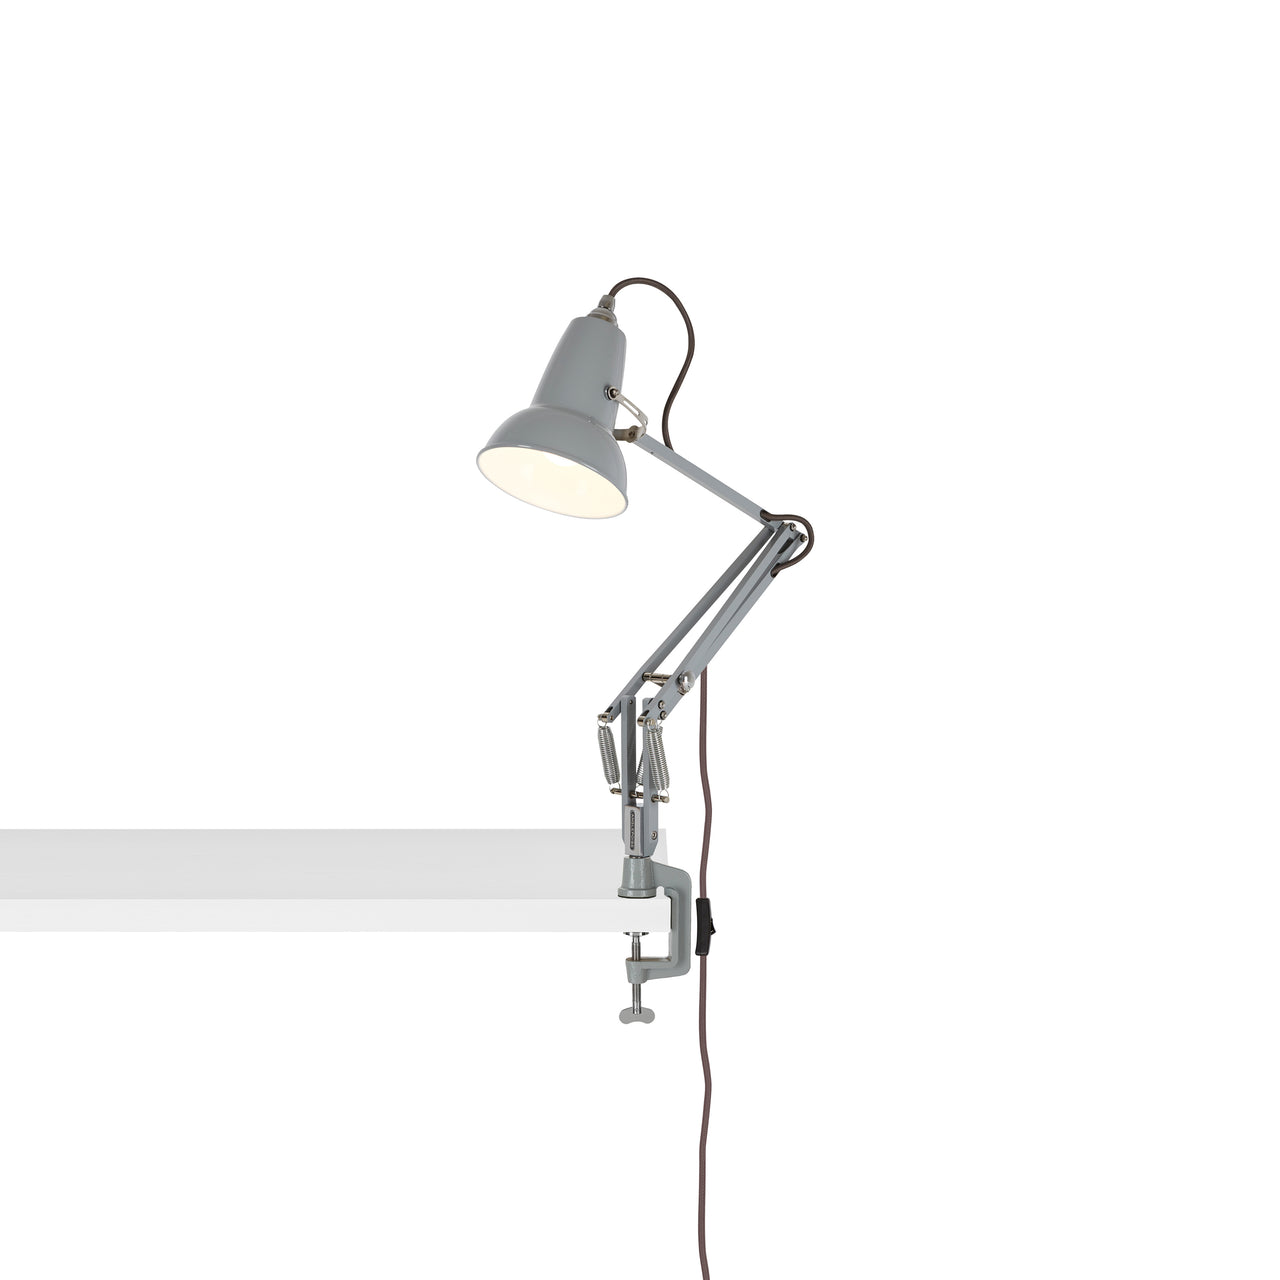 Original 1227 Mini Desk Lamp with Clamp: Dove Grey